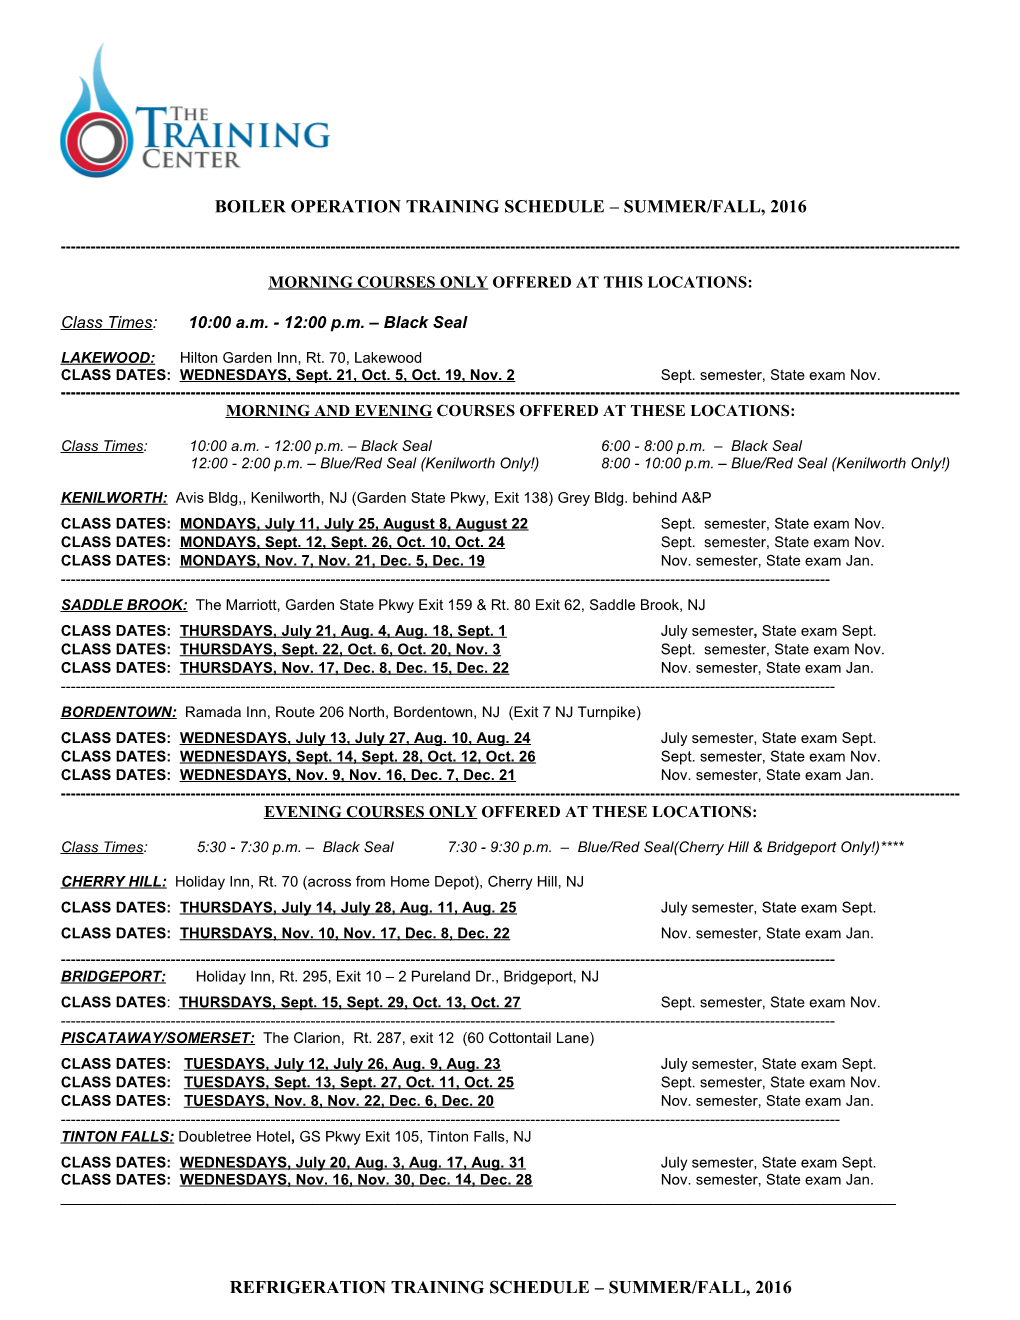 Boiler Operation Training Schedule - 1996